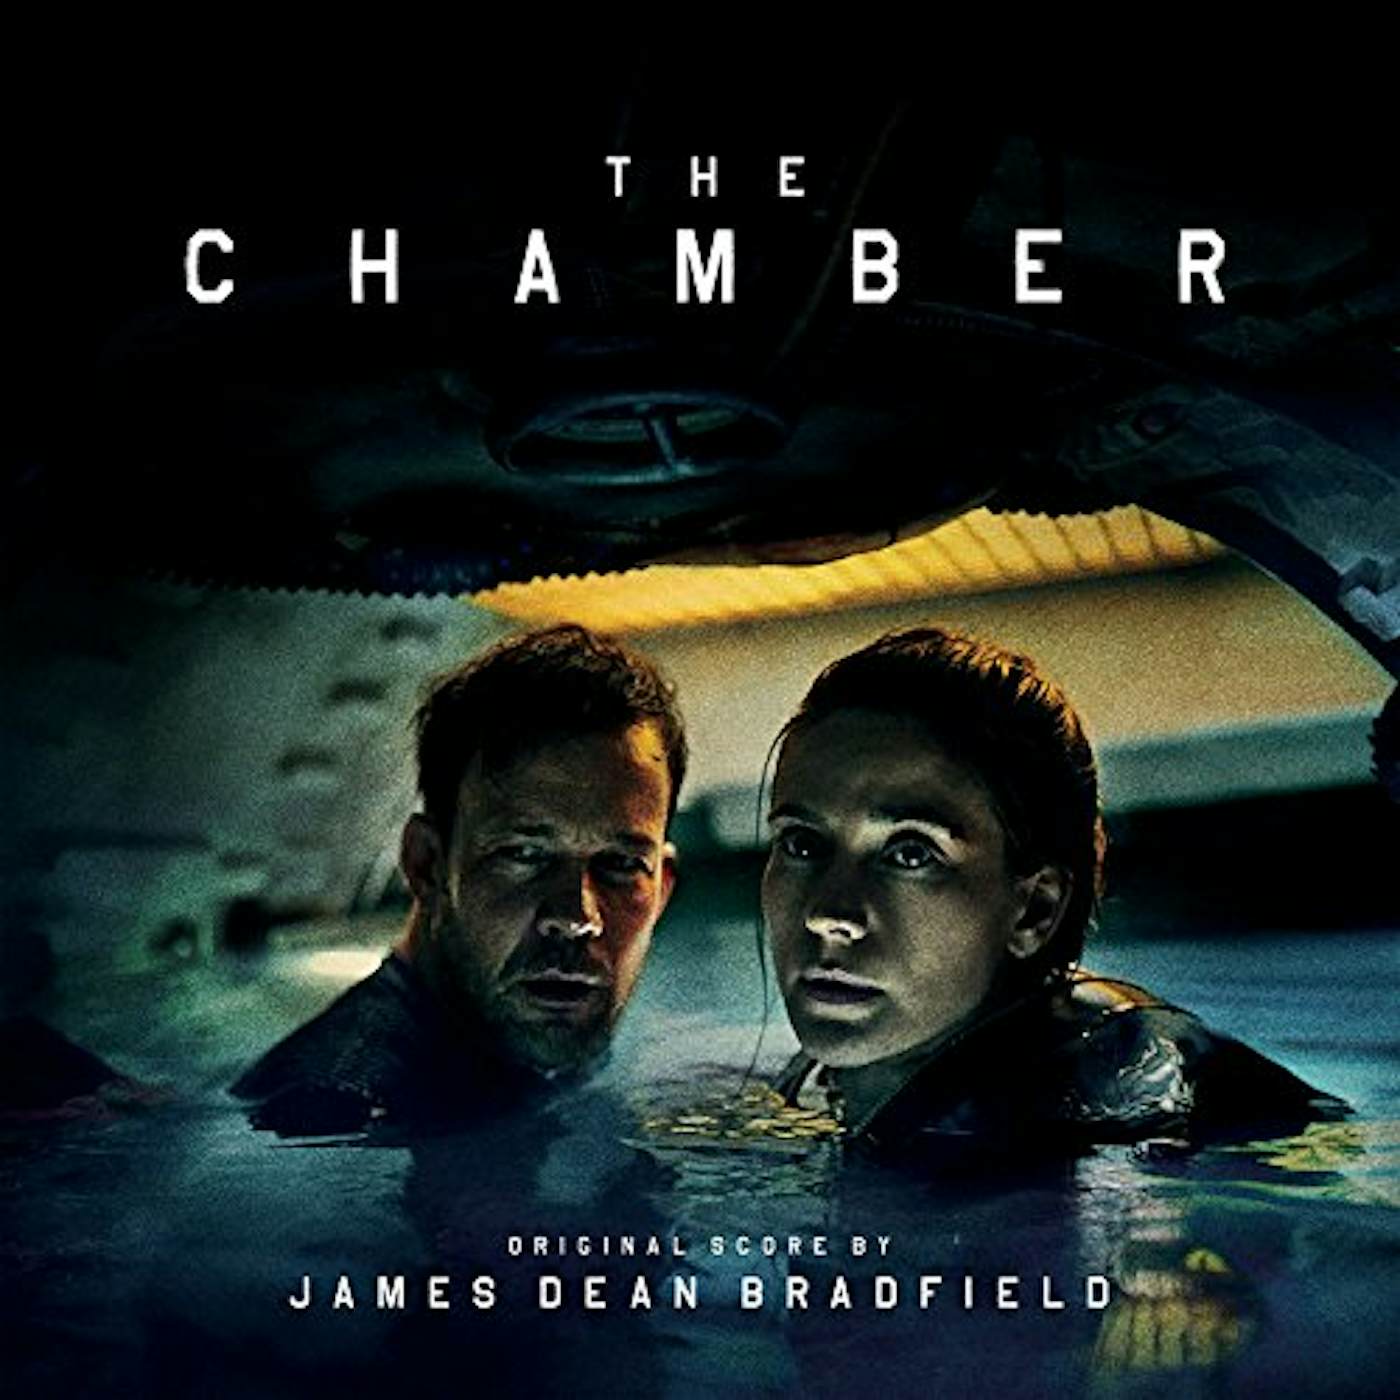 James Dean Bradfield CHAMBER / Original Soundtrack CD